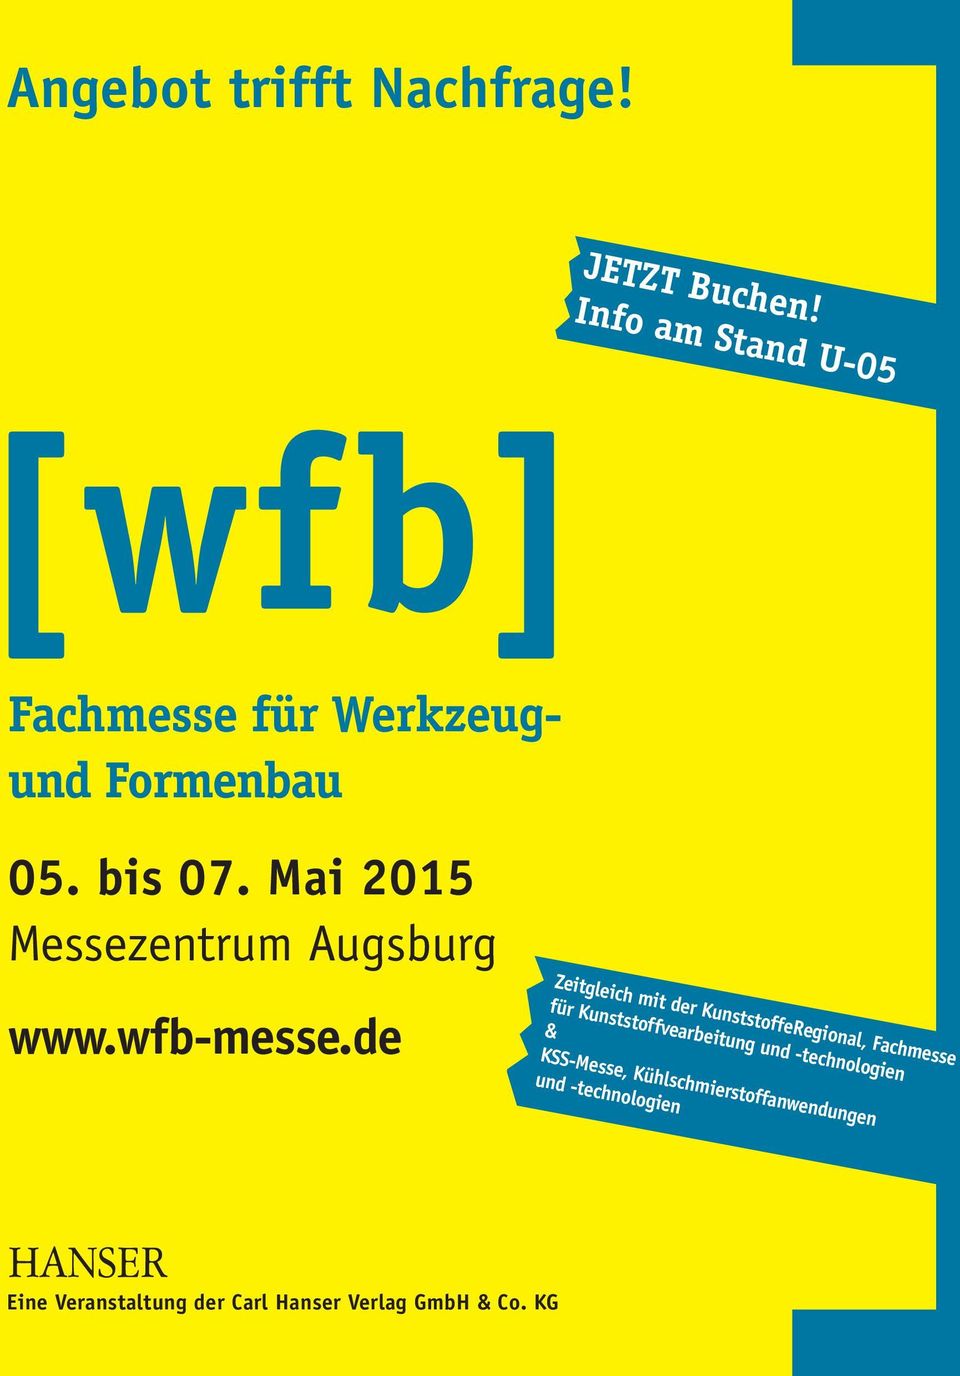 Mai 2015 Messezentrum Augsburg www.wfb-messe.